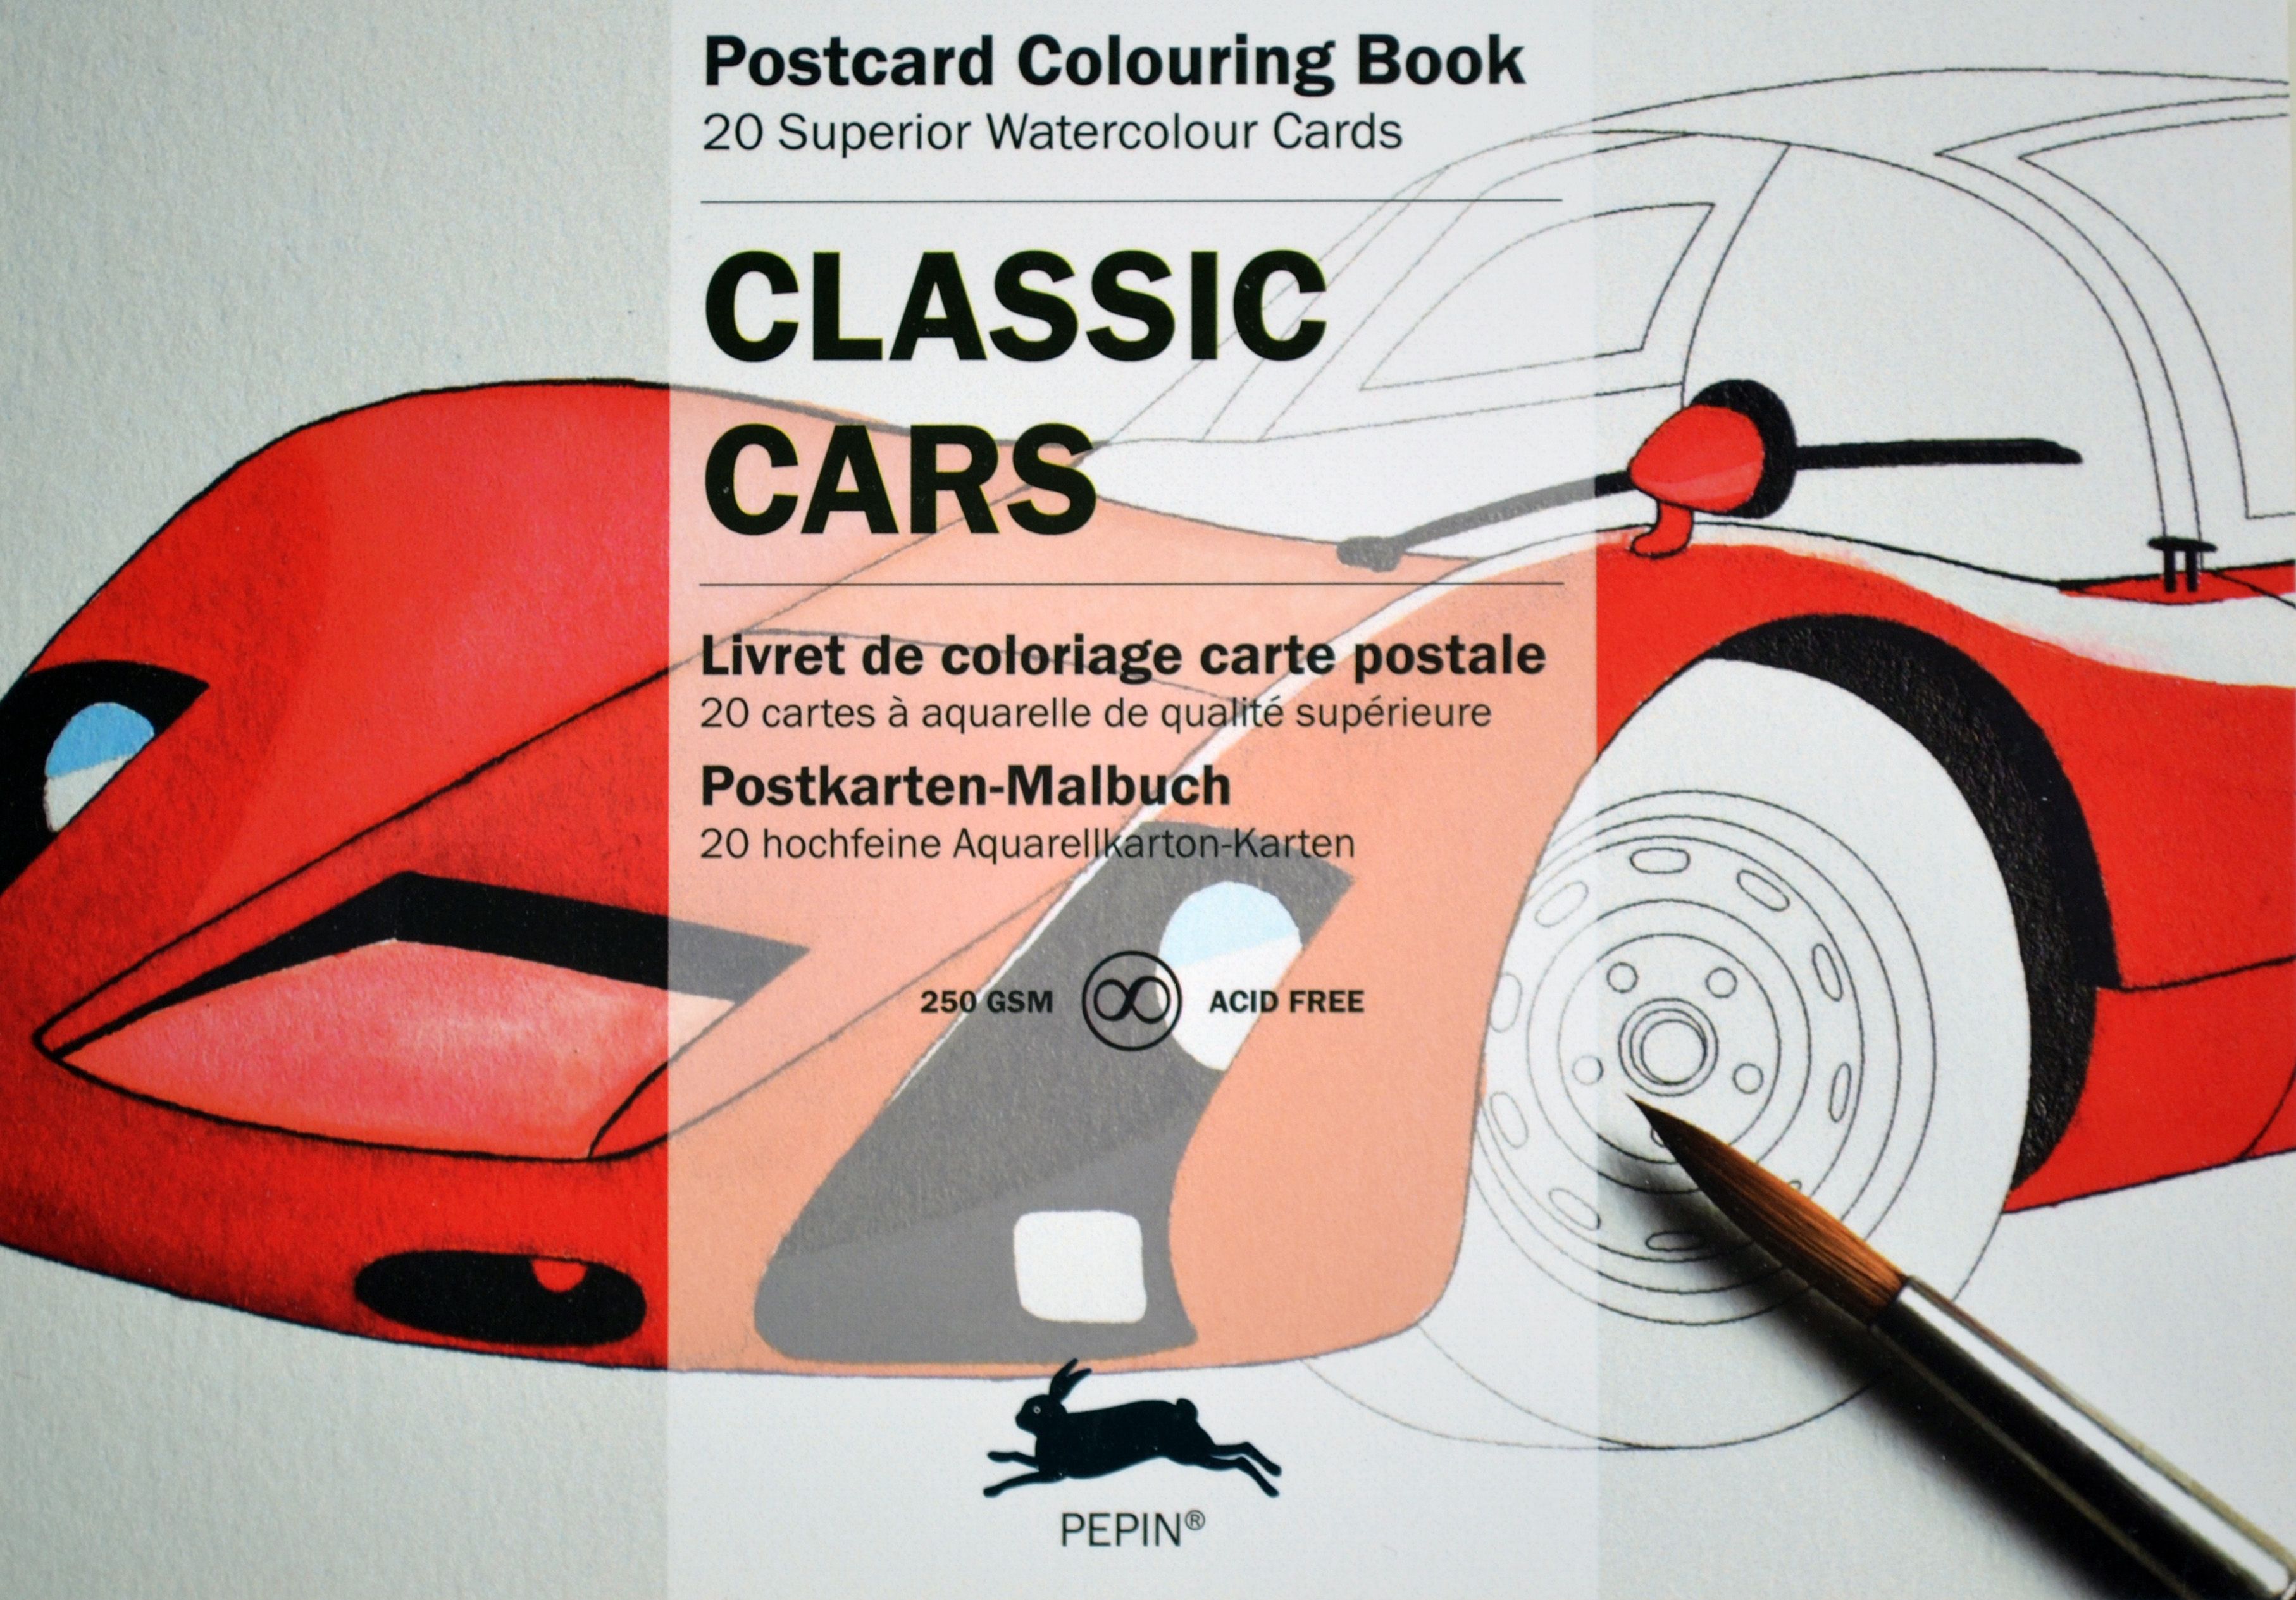 CLASSIC CARS: PEPIN POSTCARD COLOURING BOOK